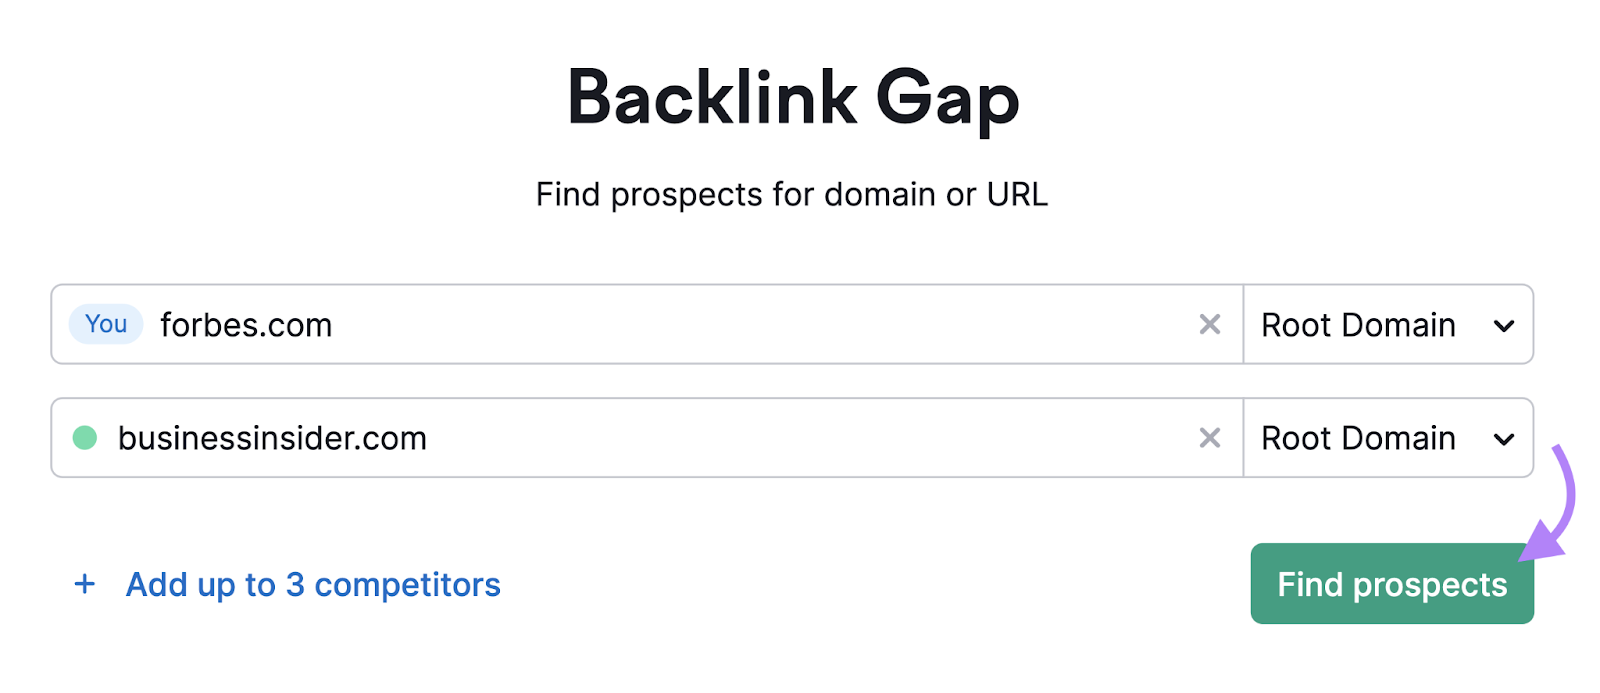 "forbes.com," and "businessinsider.com" entered into the Backlink Gap tool.search bar